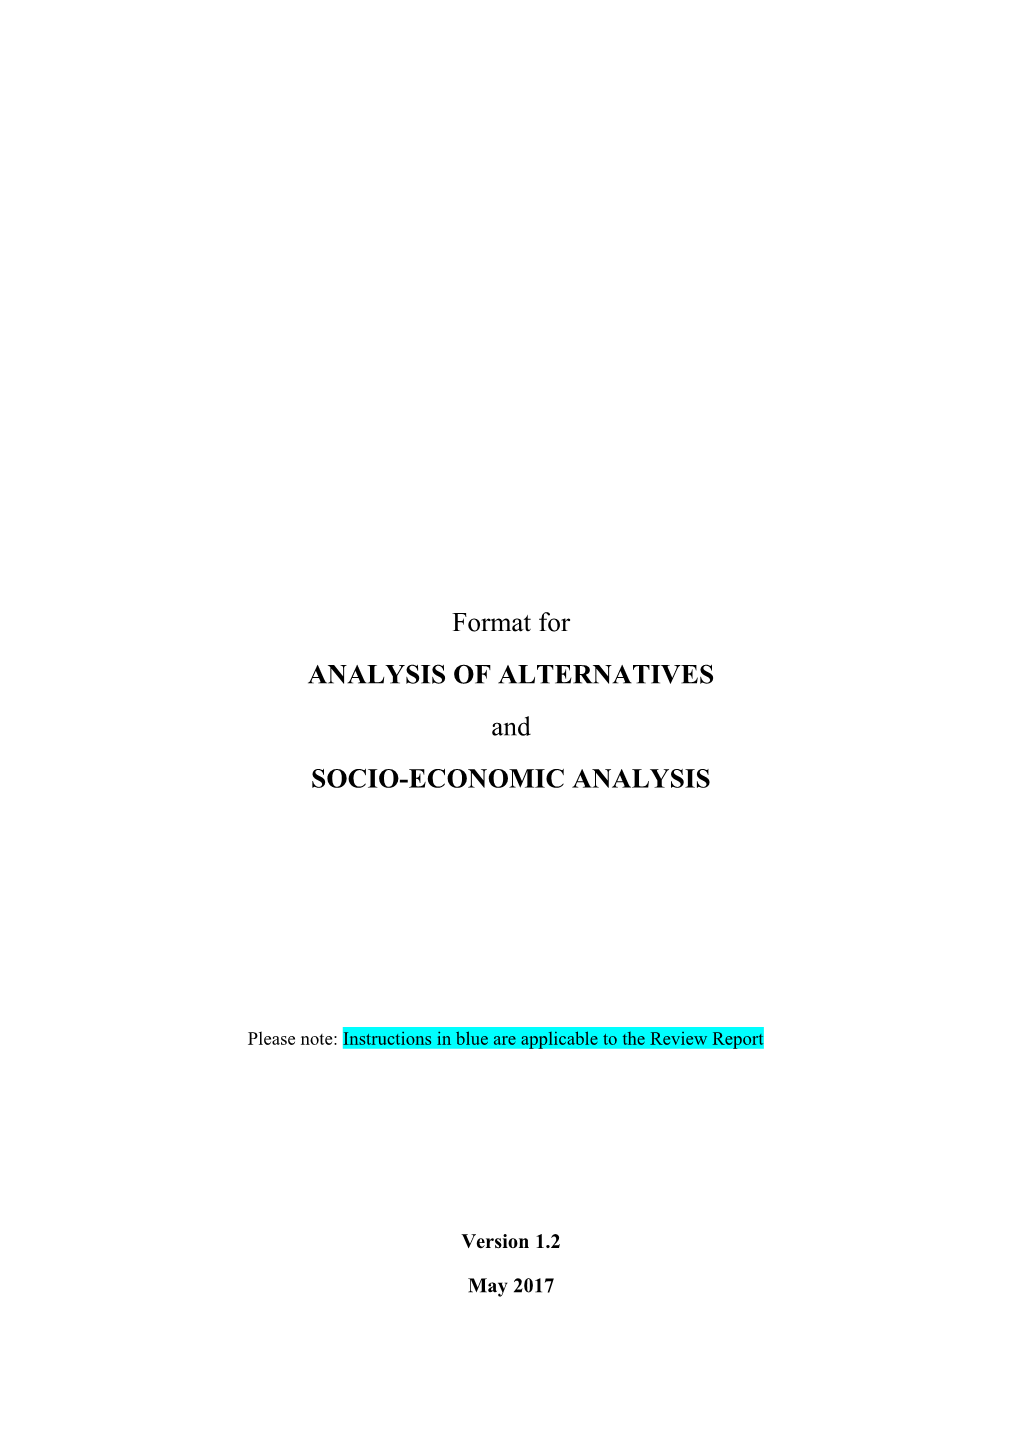 ANALYSIS of ALTERNATIVES and SOCIO-ECONOMIC ANALYSIS